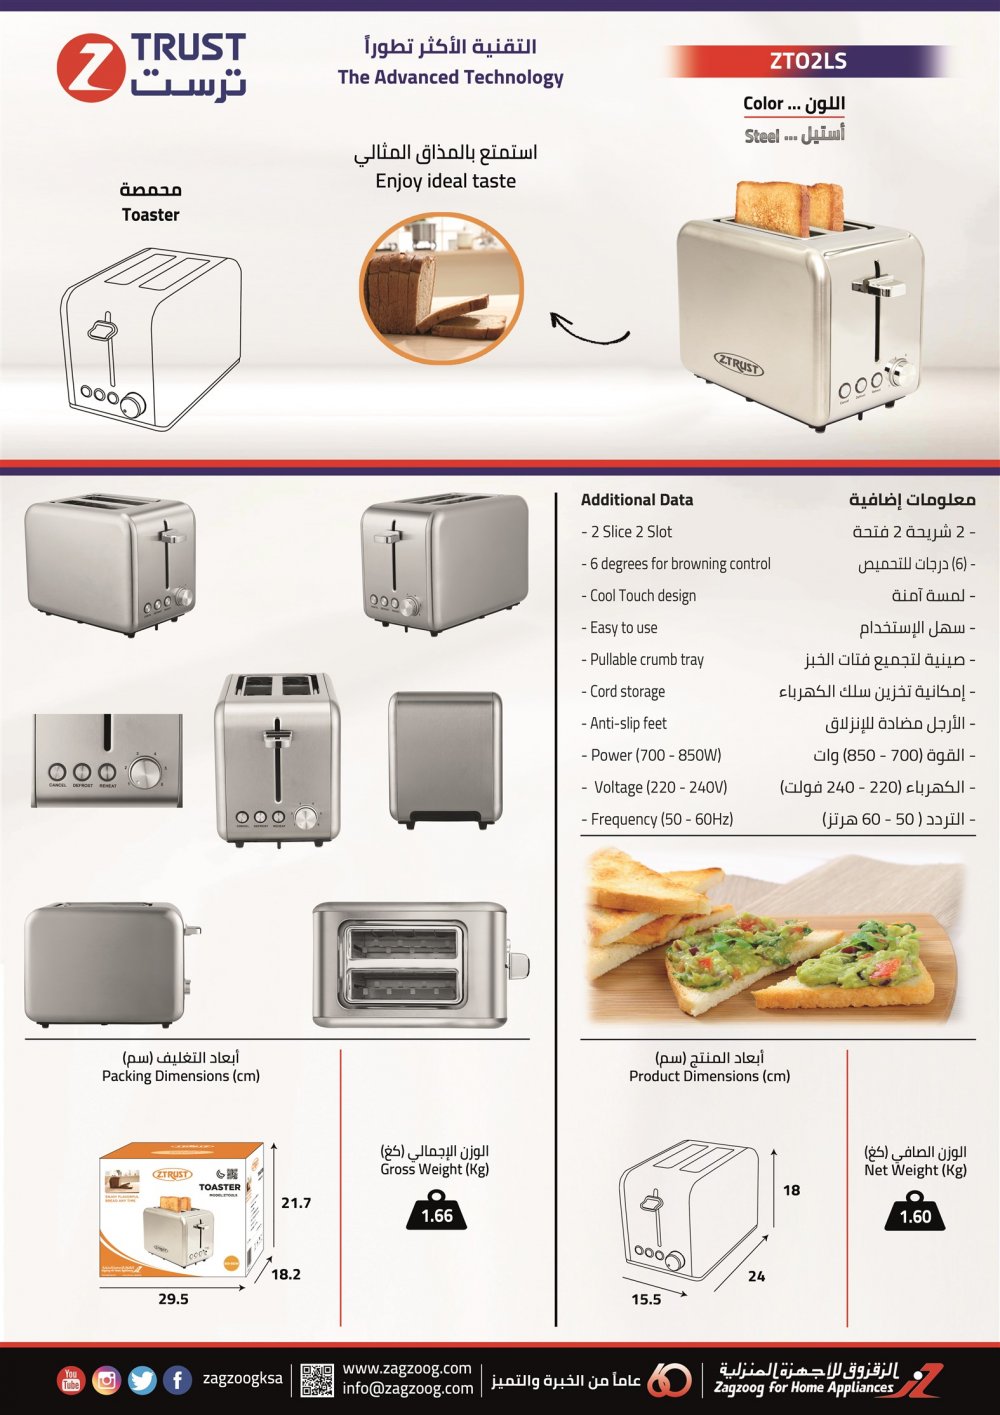 Toaster, 2Slice,700-850W-St